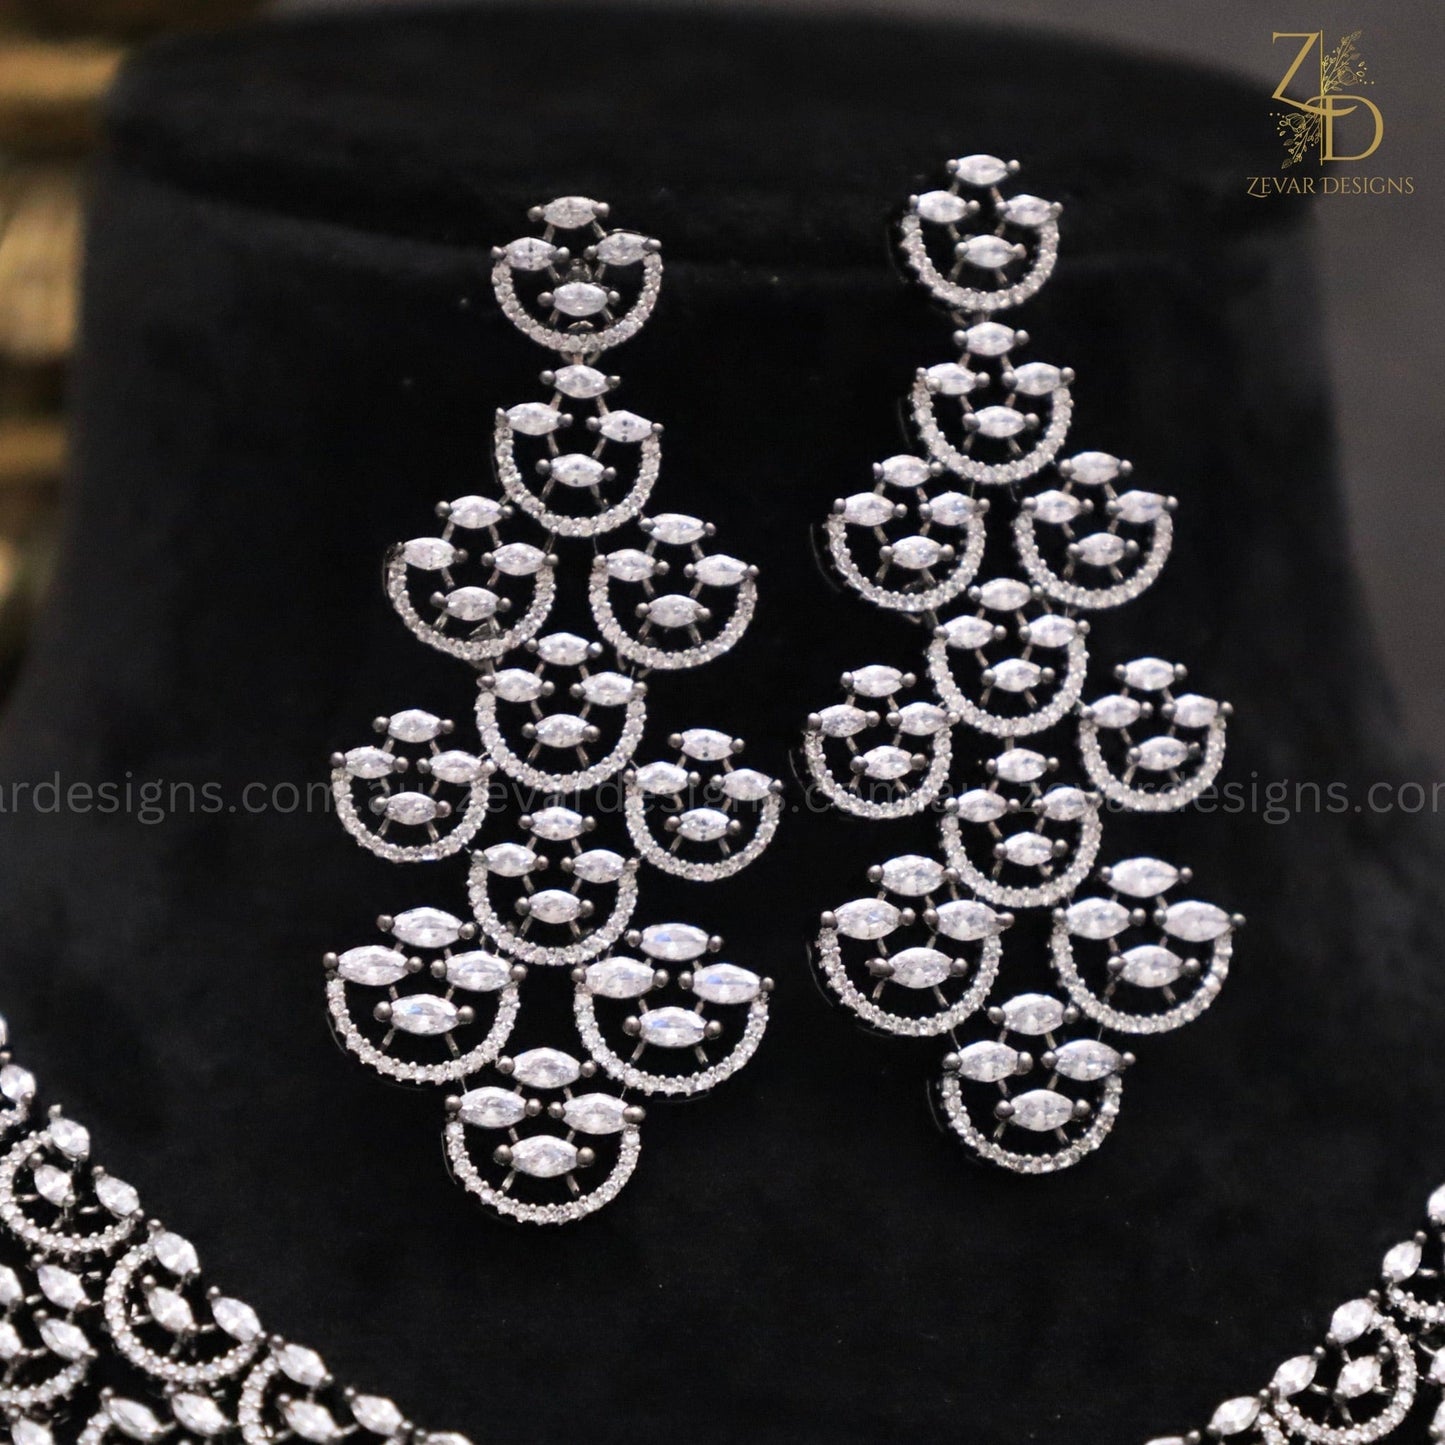 Zevar Designs Necklace Sets - AD Black & Silver Finish American Diamonds studded Necklace Set